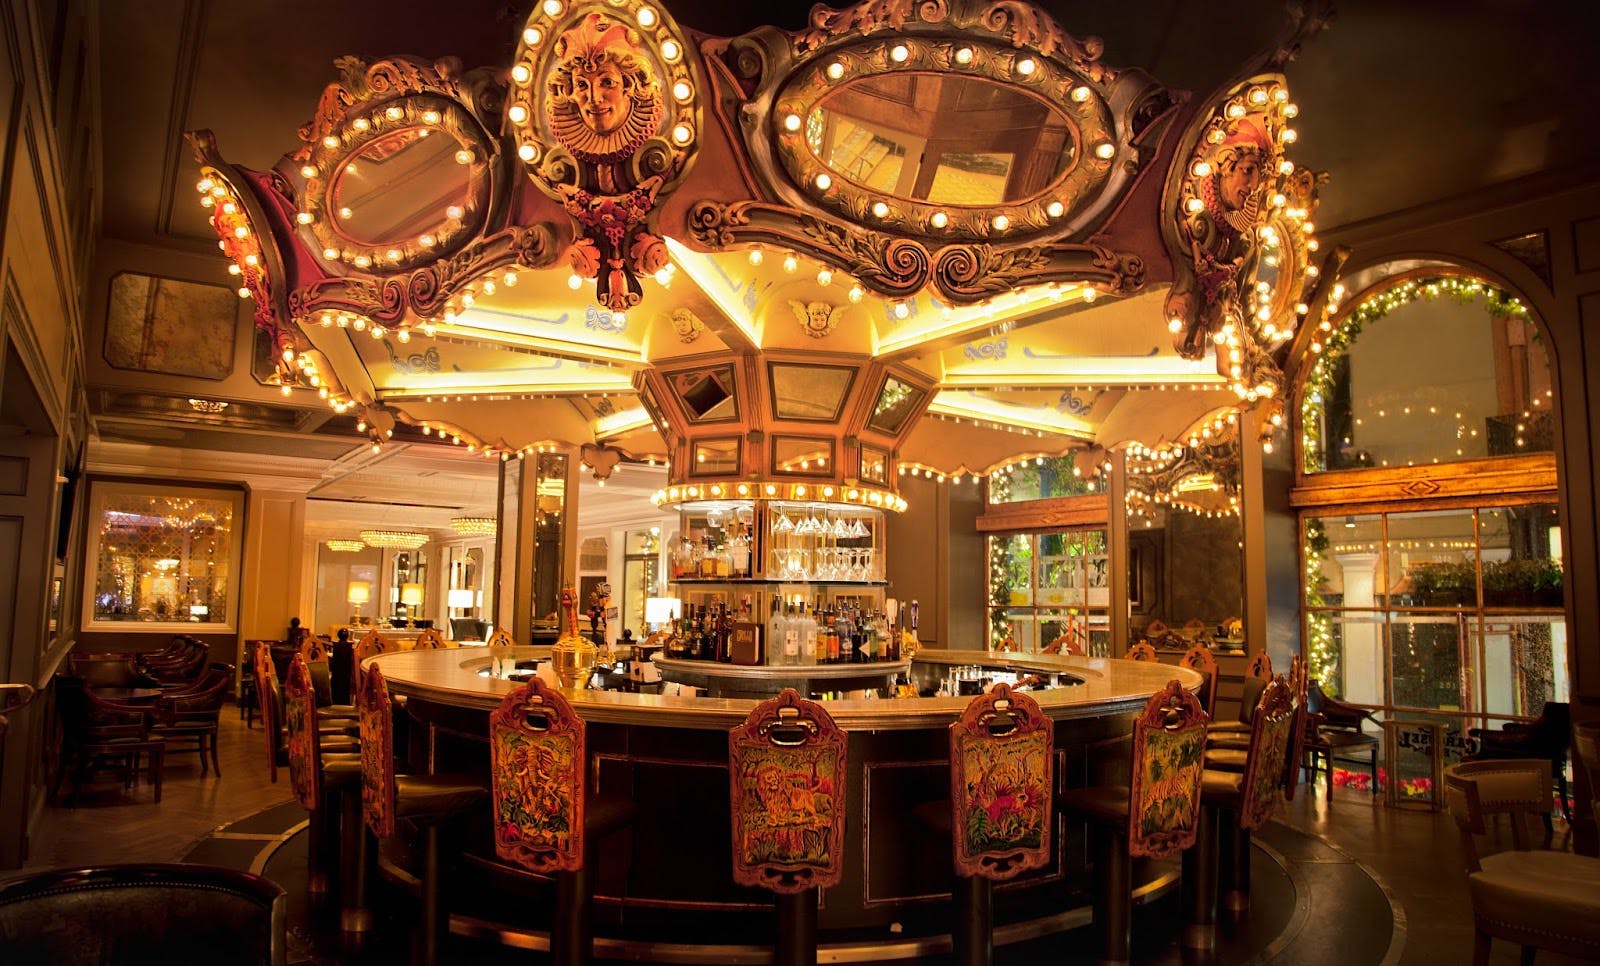 Image - The Carousel Bar & Lounge